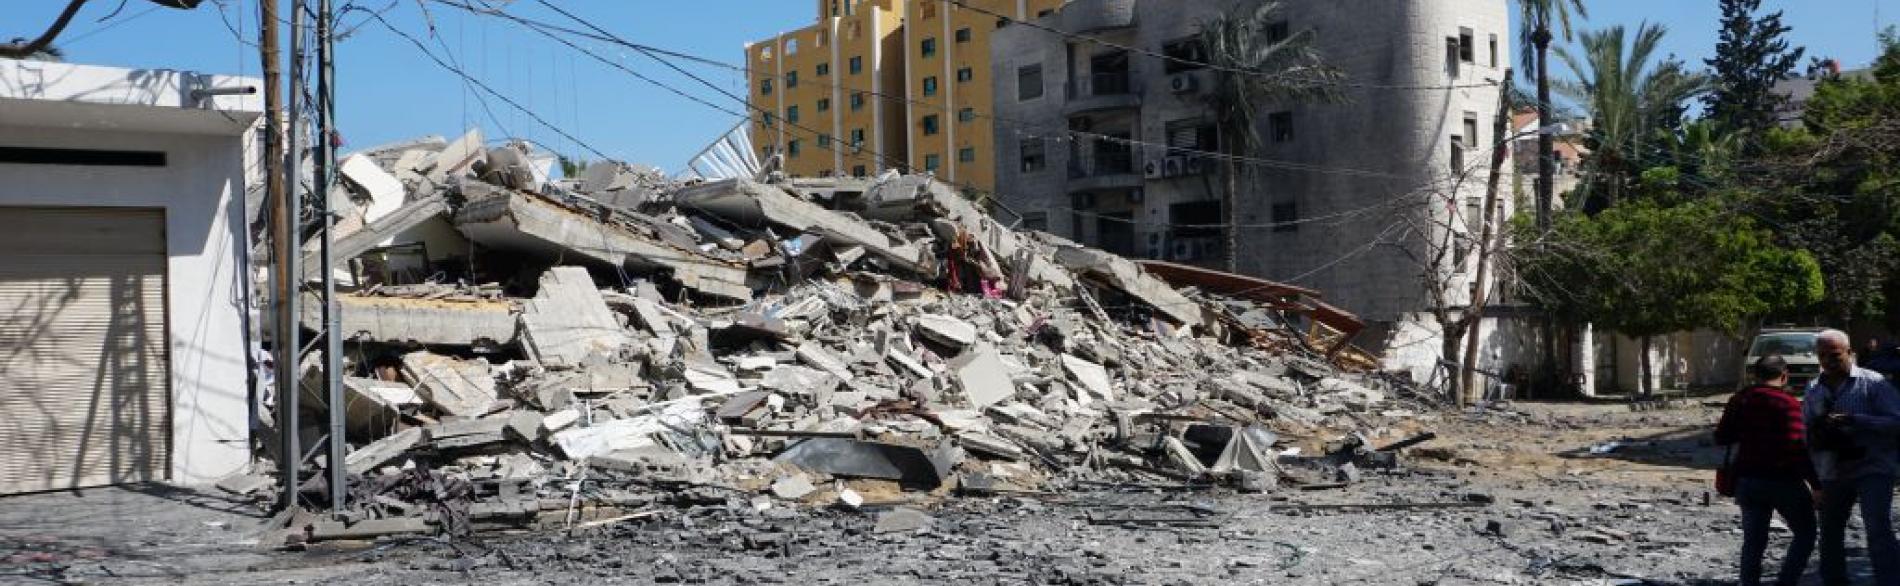 Building destroyed on 5 May 2019, Gaza City. ©  Photo by OCHA